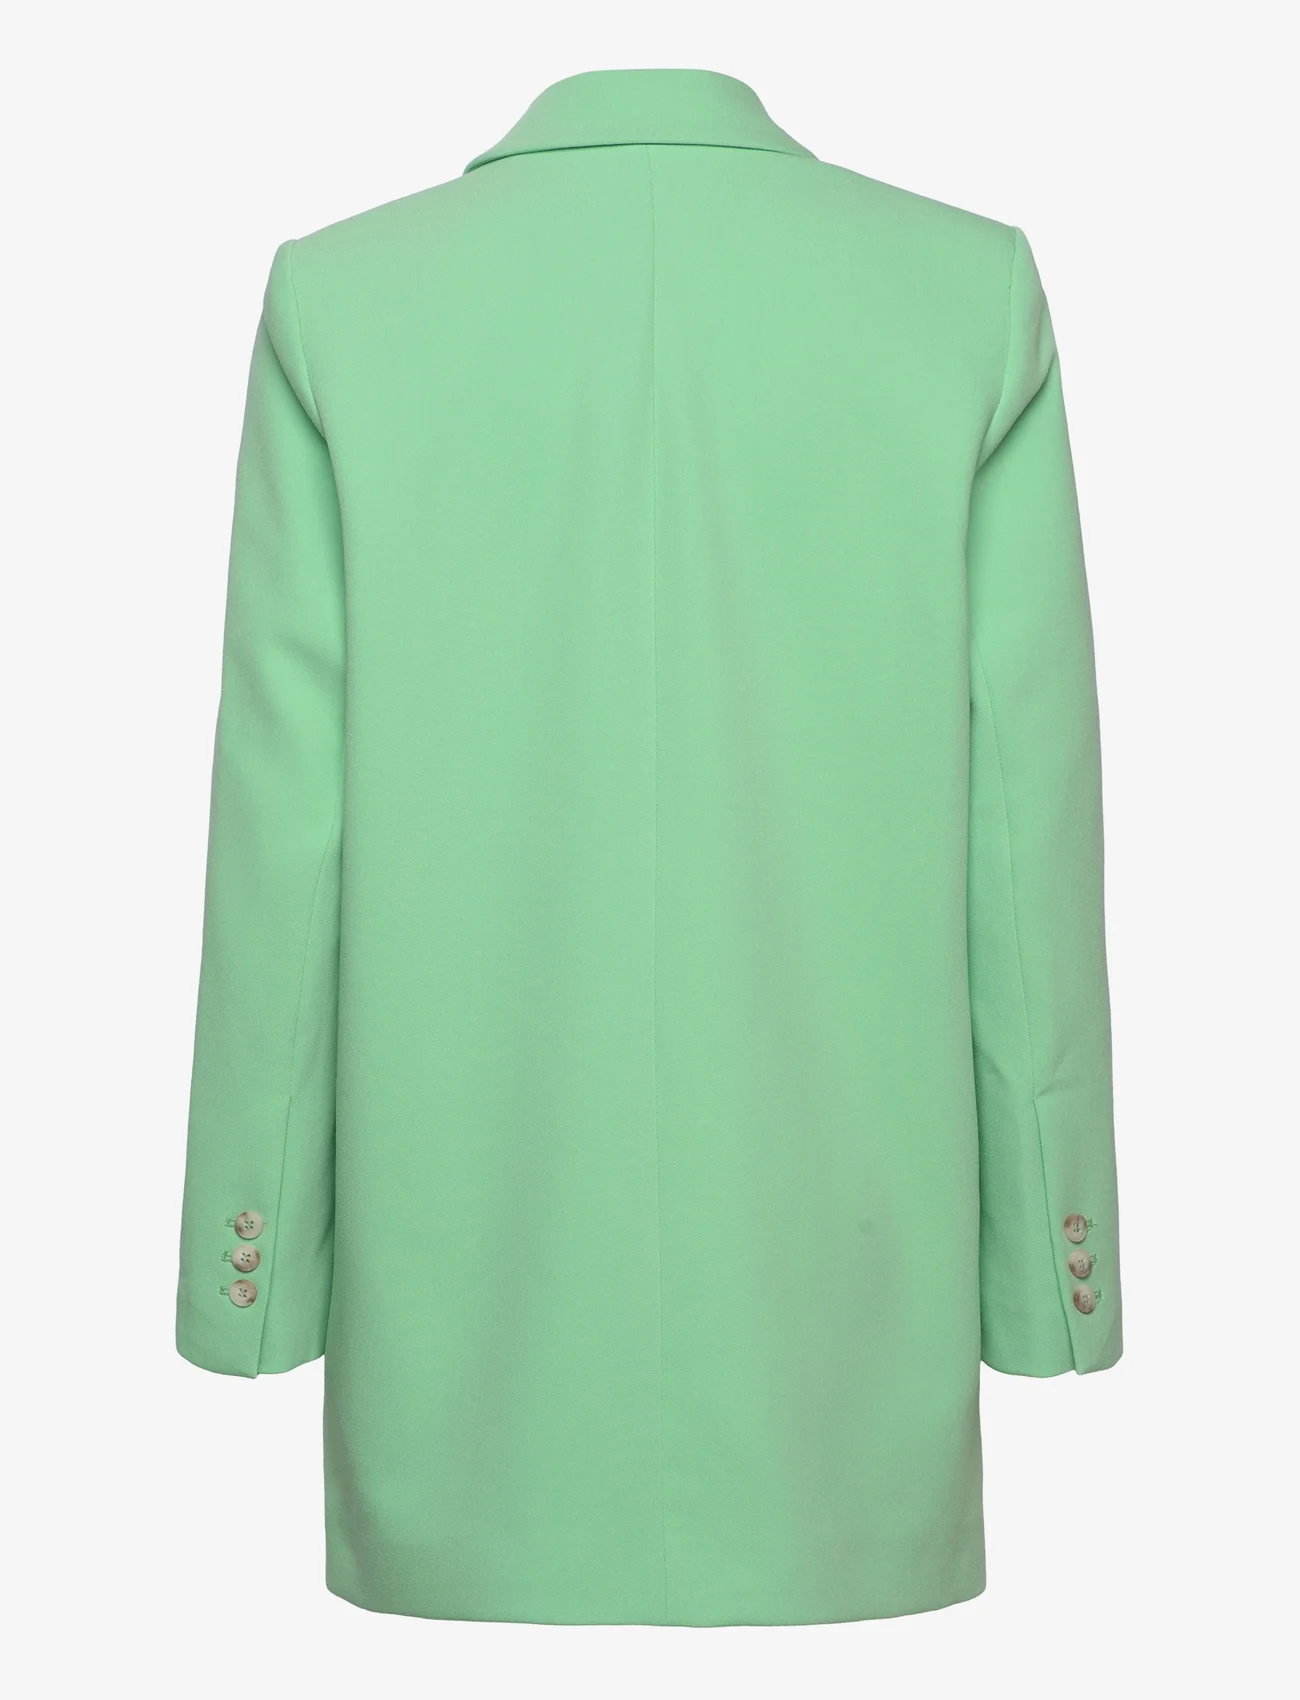 Selected Femme - SLFNEW MYLA LS RELAXED BLAZER NOOS - feestelijke kleding voor outlet-prijzen - absinthe green - 1